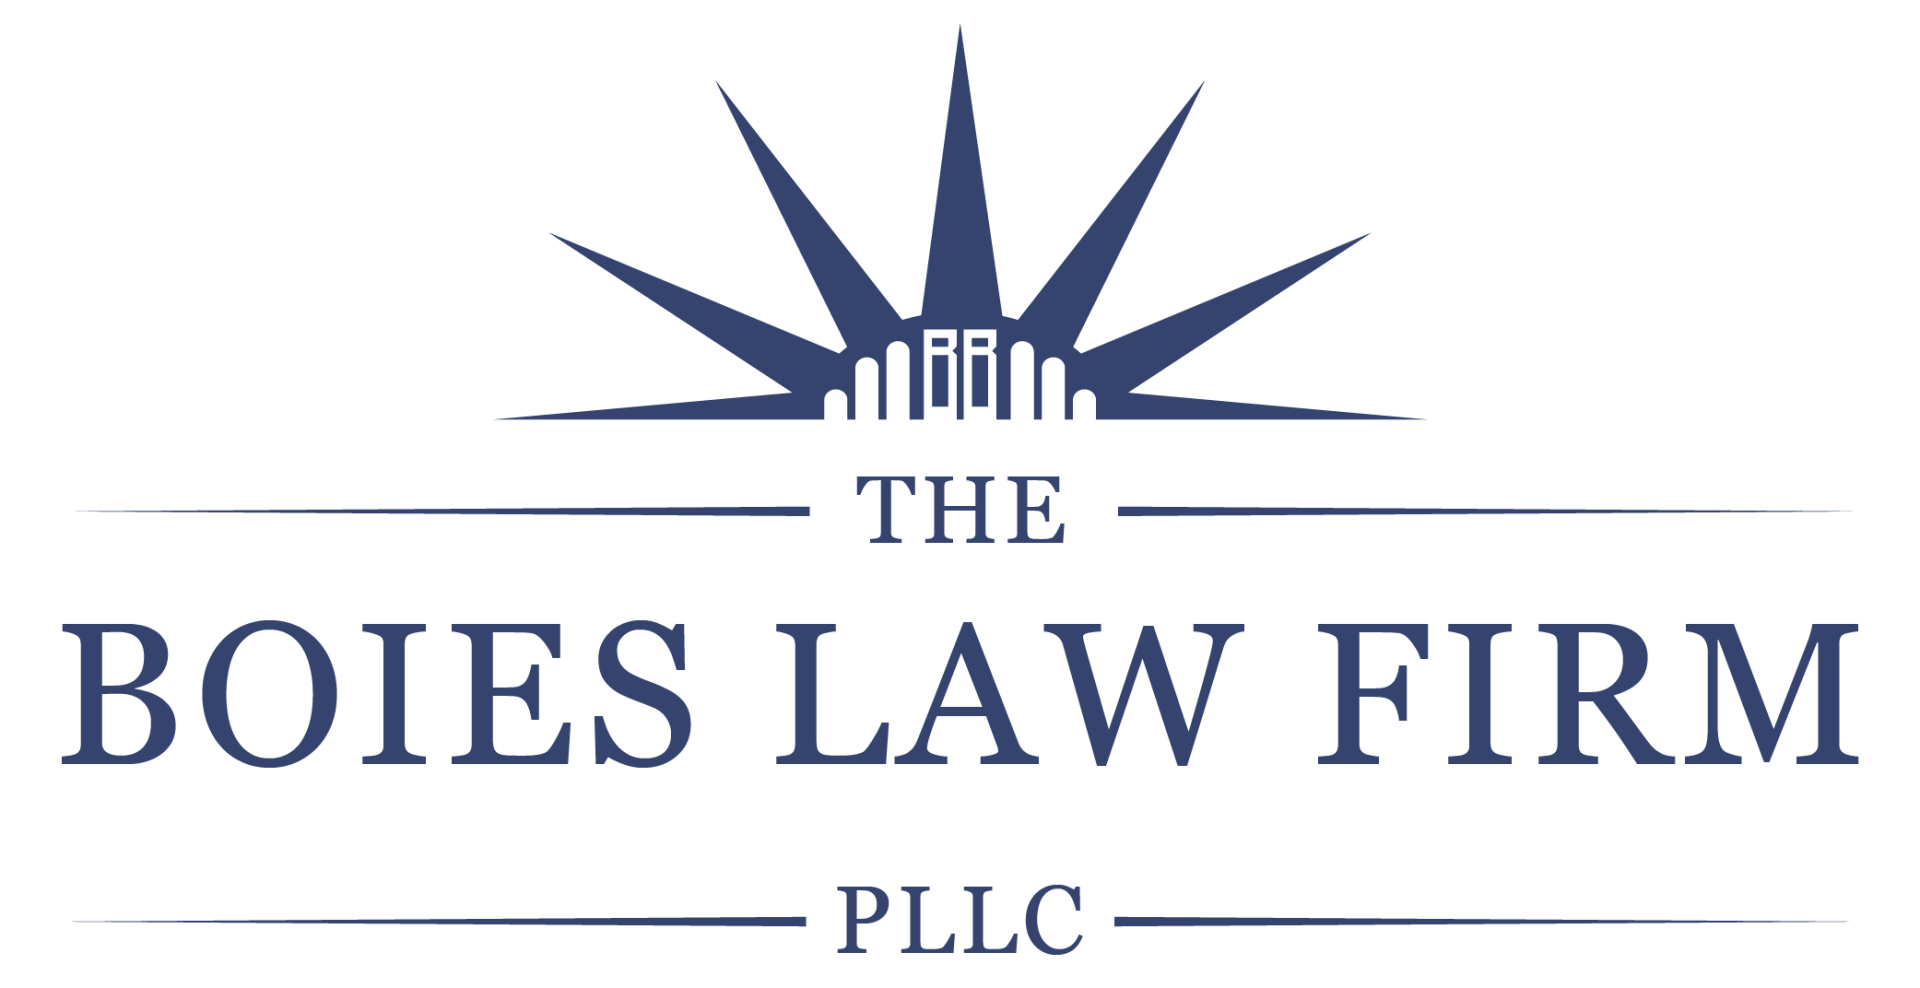 THE BOIES LAW FIRM, PLLC logo